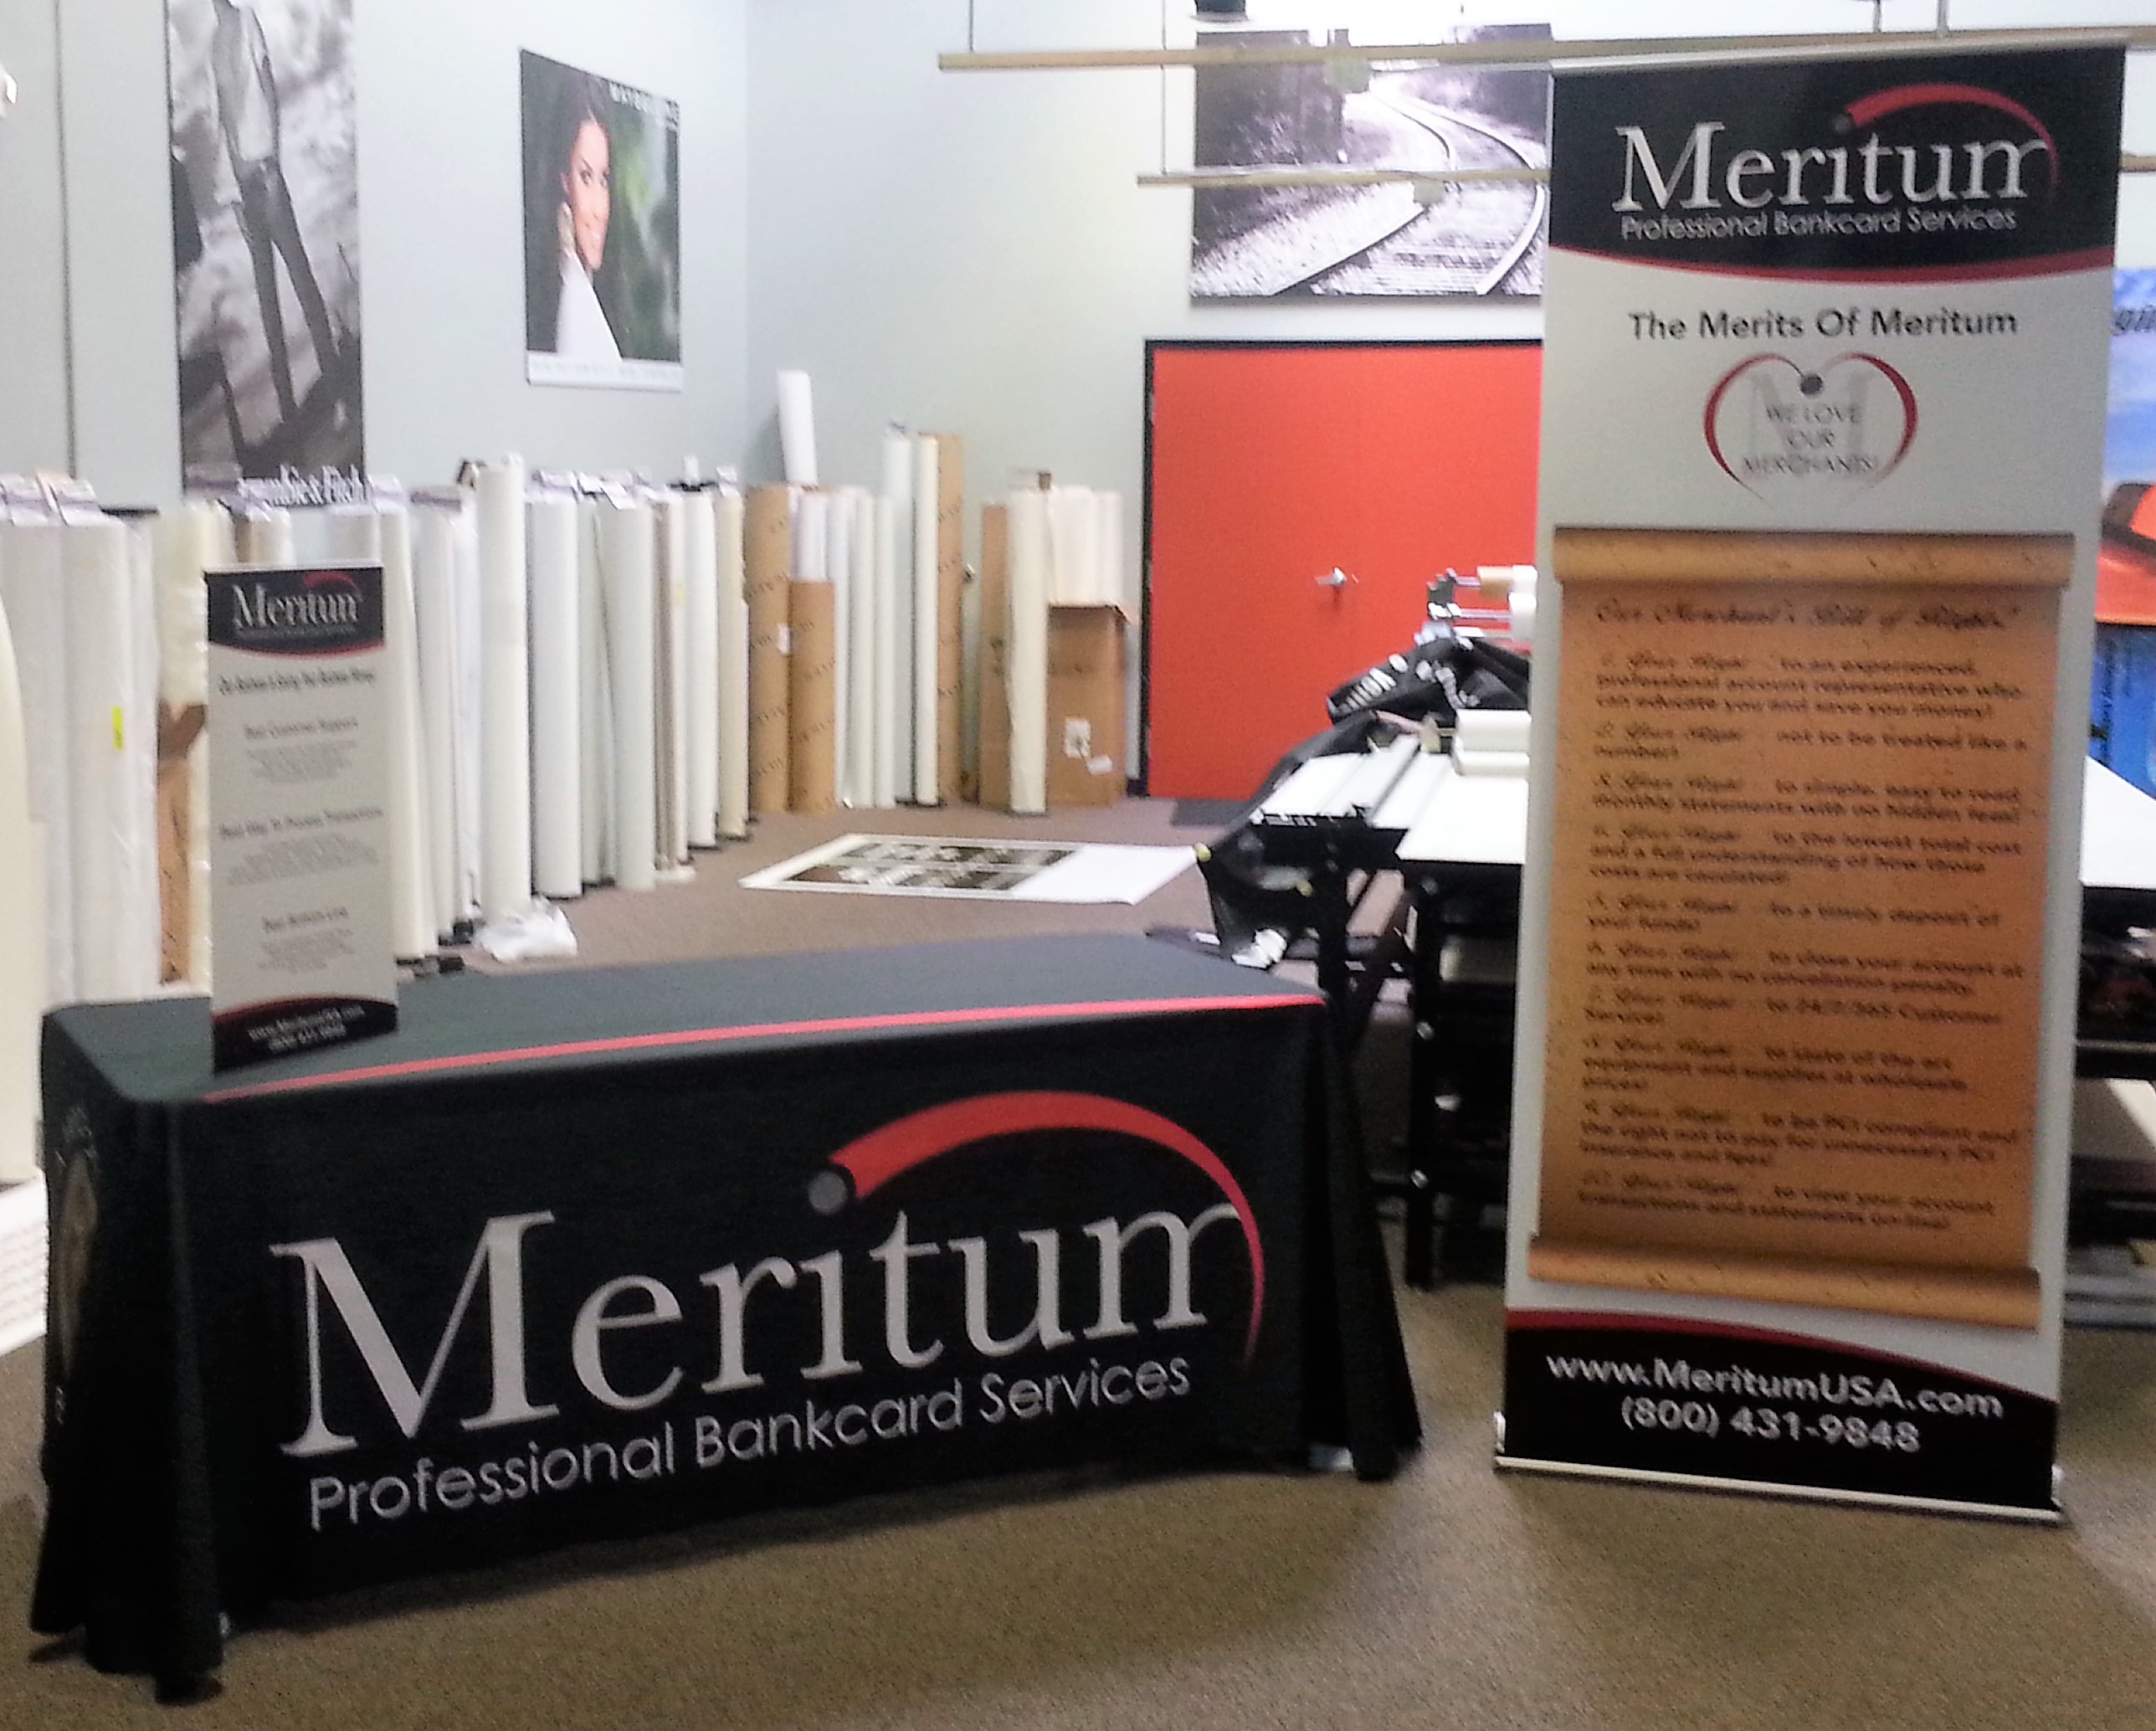 Mertitum event set up